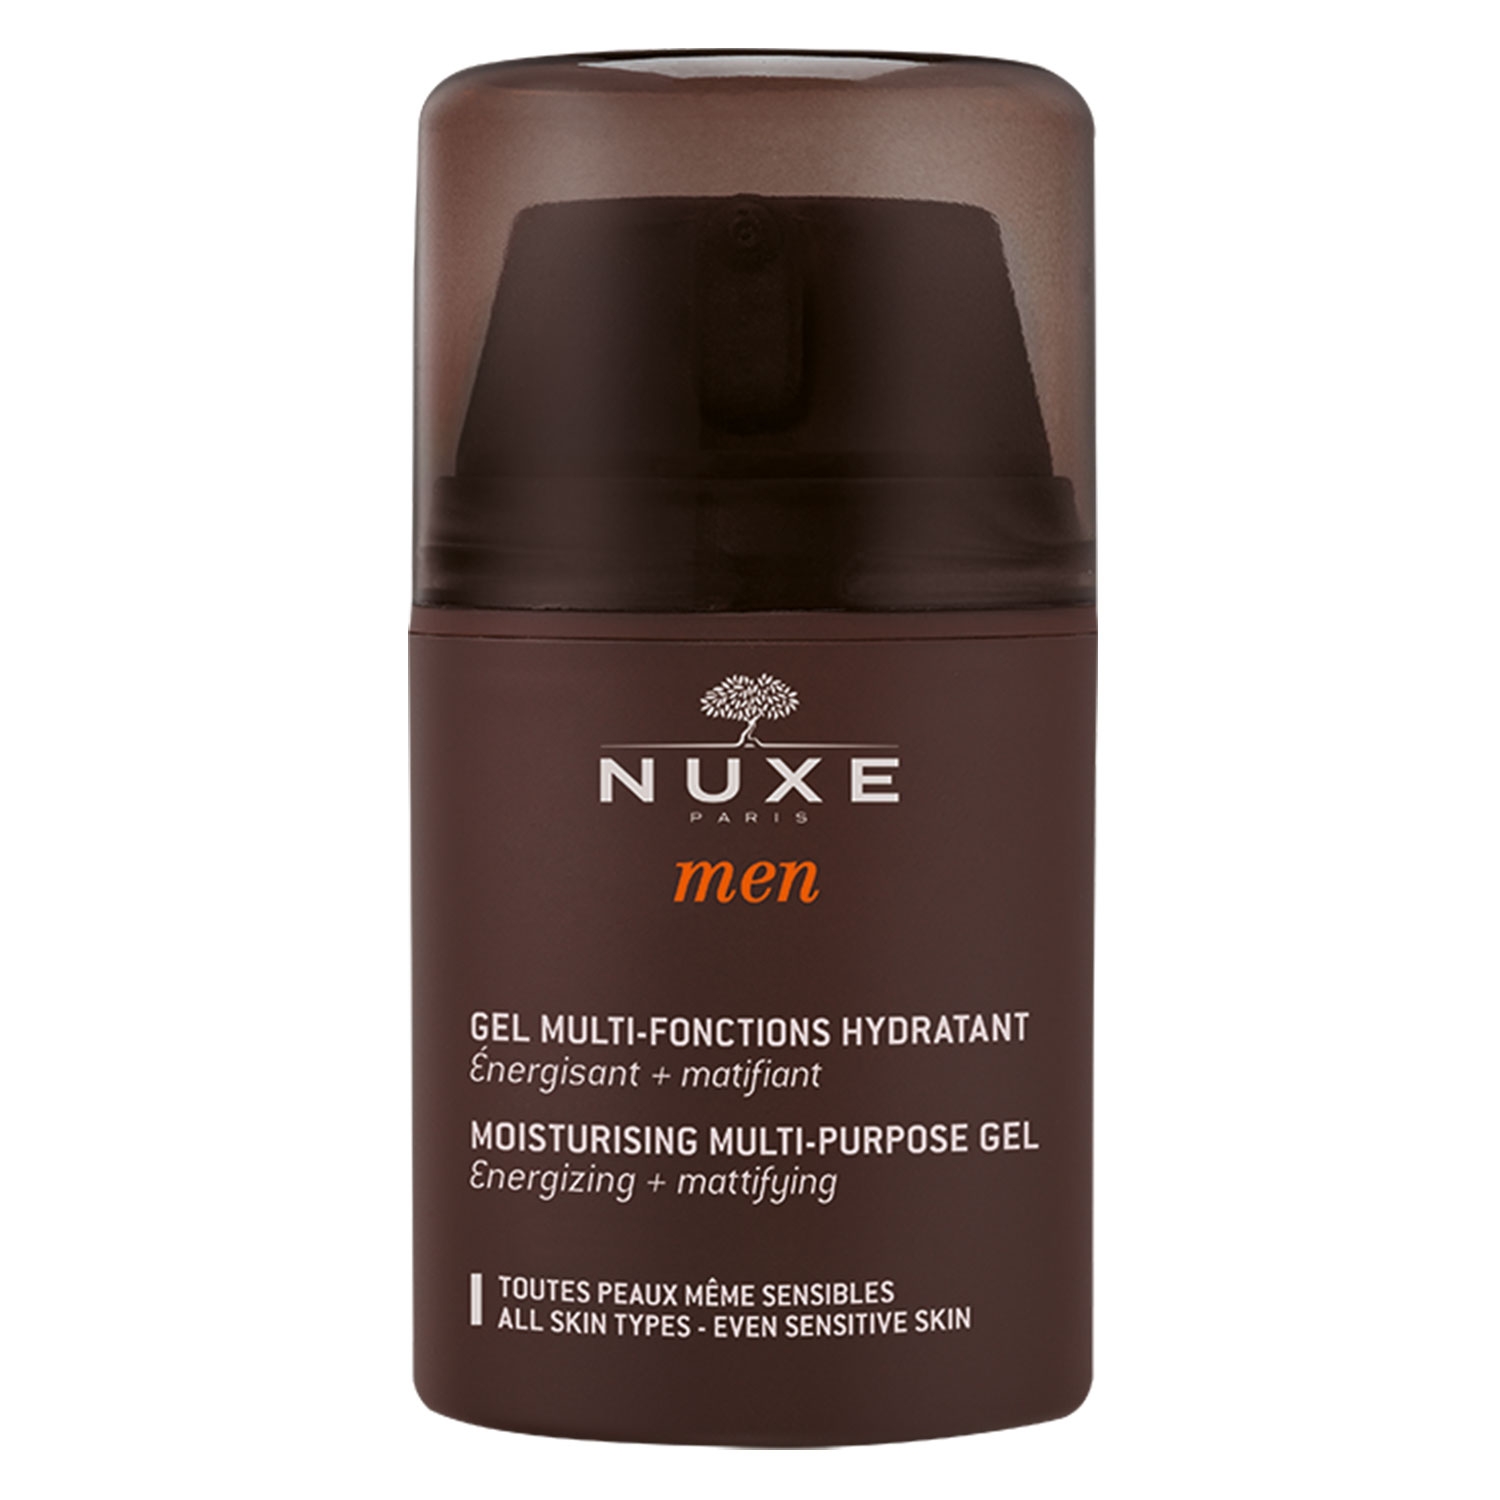 Produktbild von Nuxe Men - Gel multi-fonctions hydratant